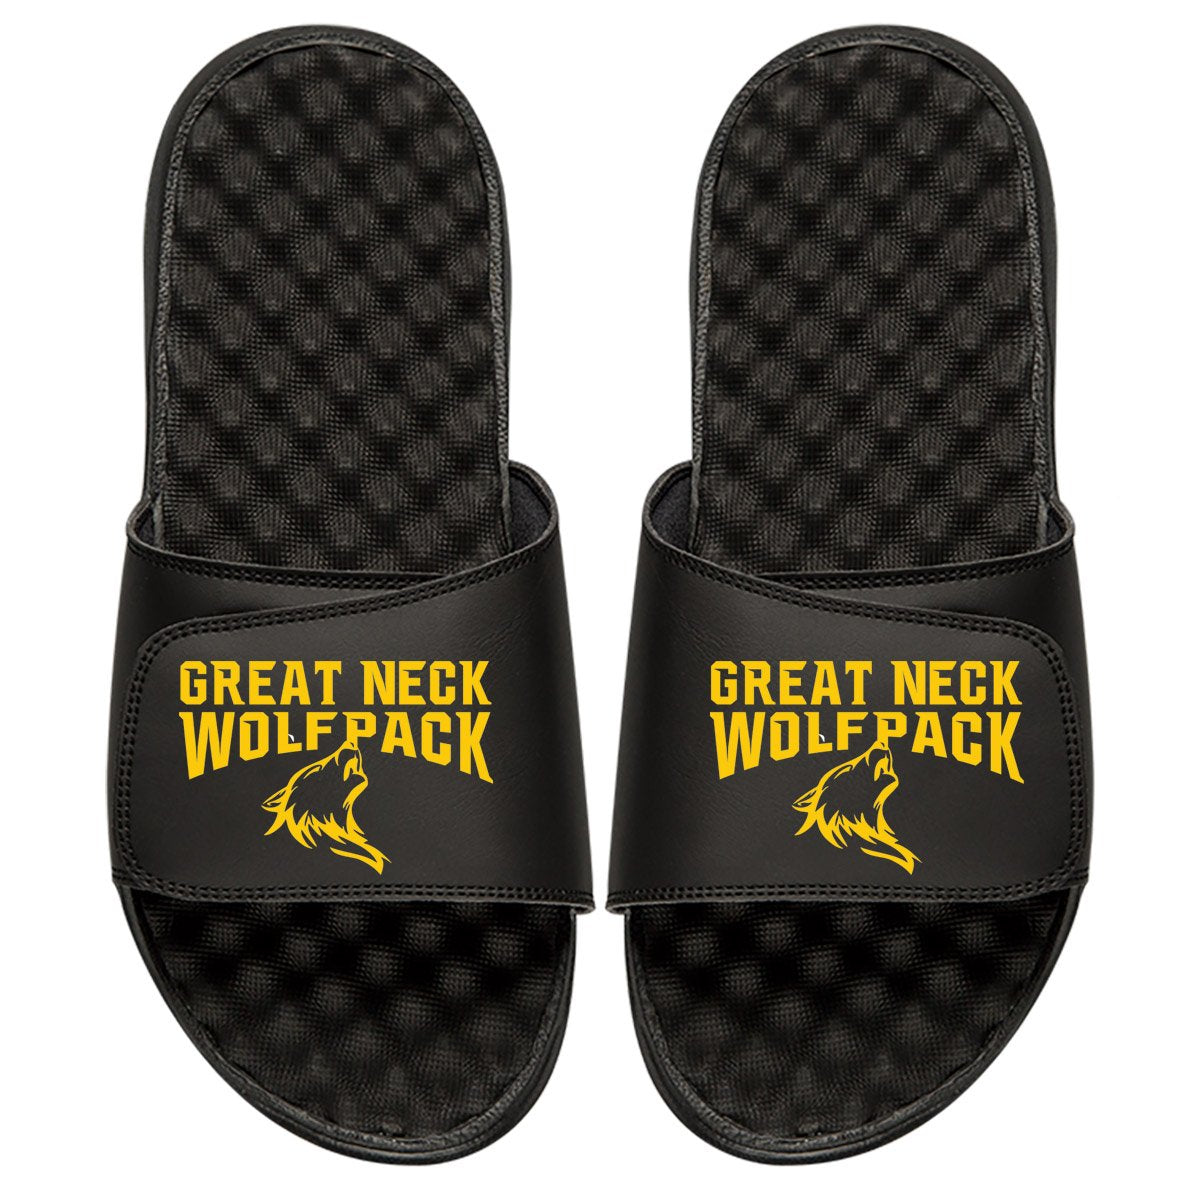 Great Neck Wolfpack - ISlide